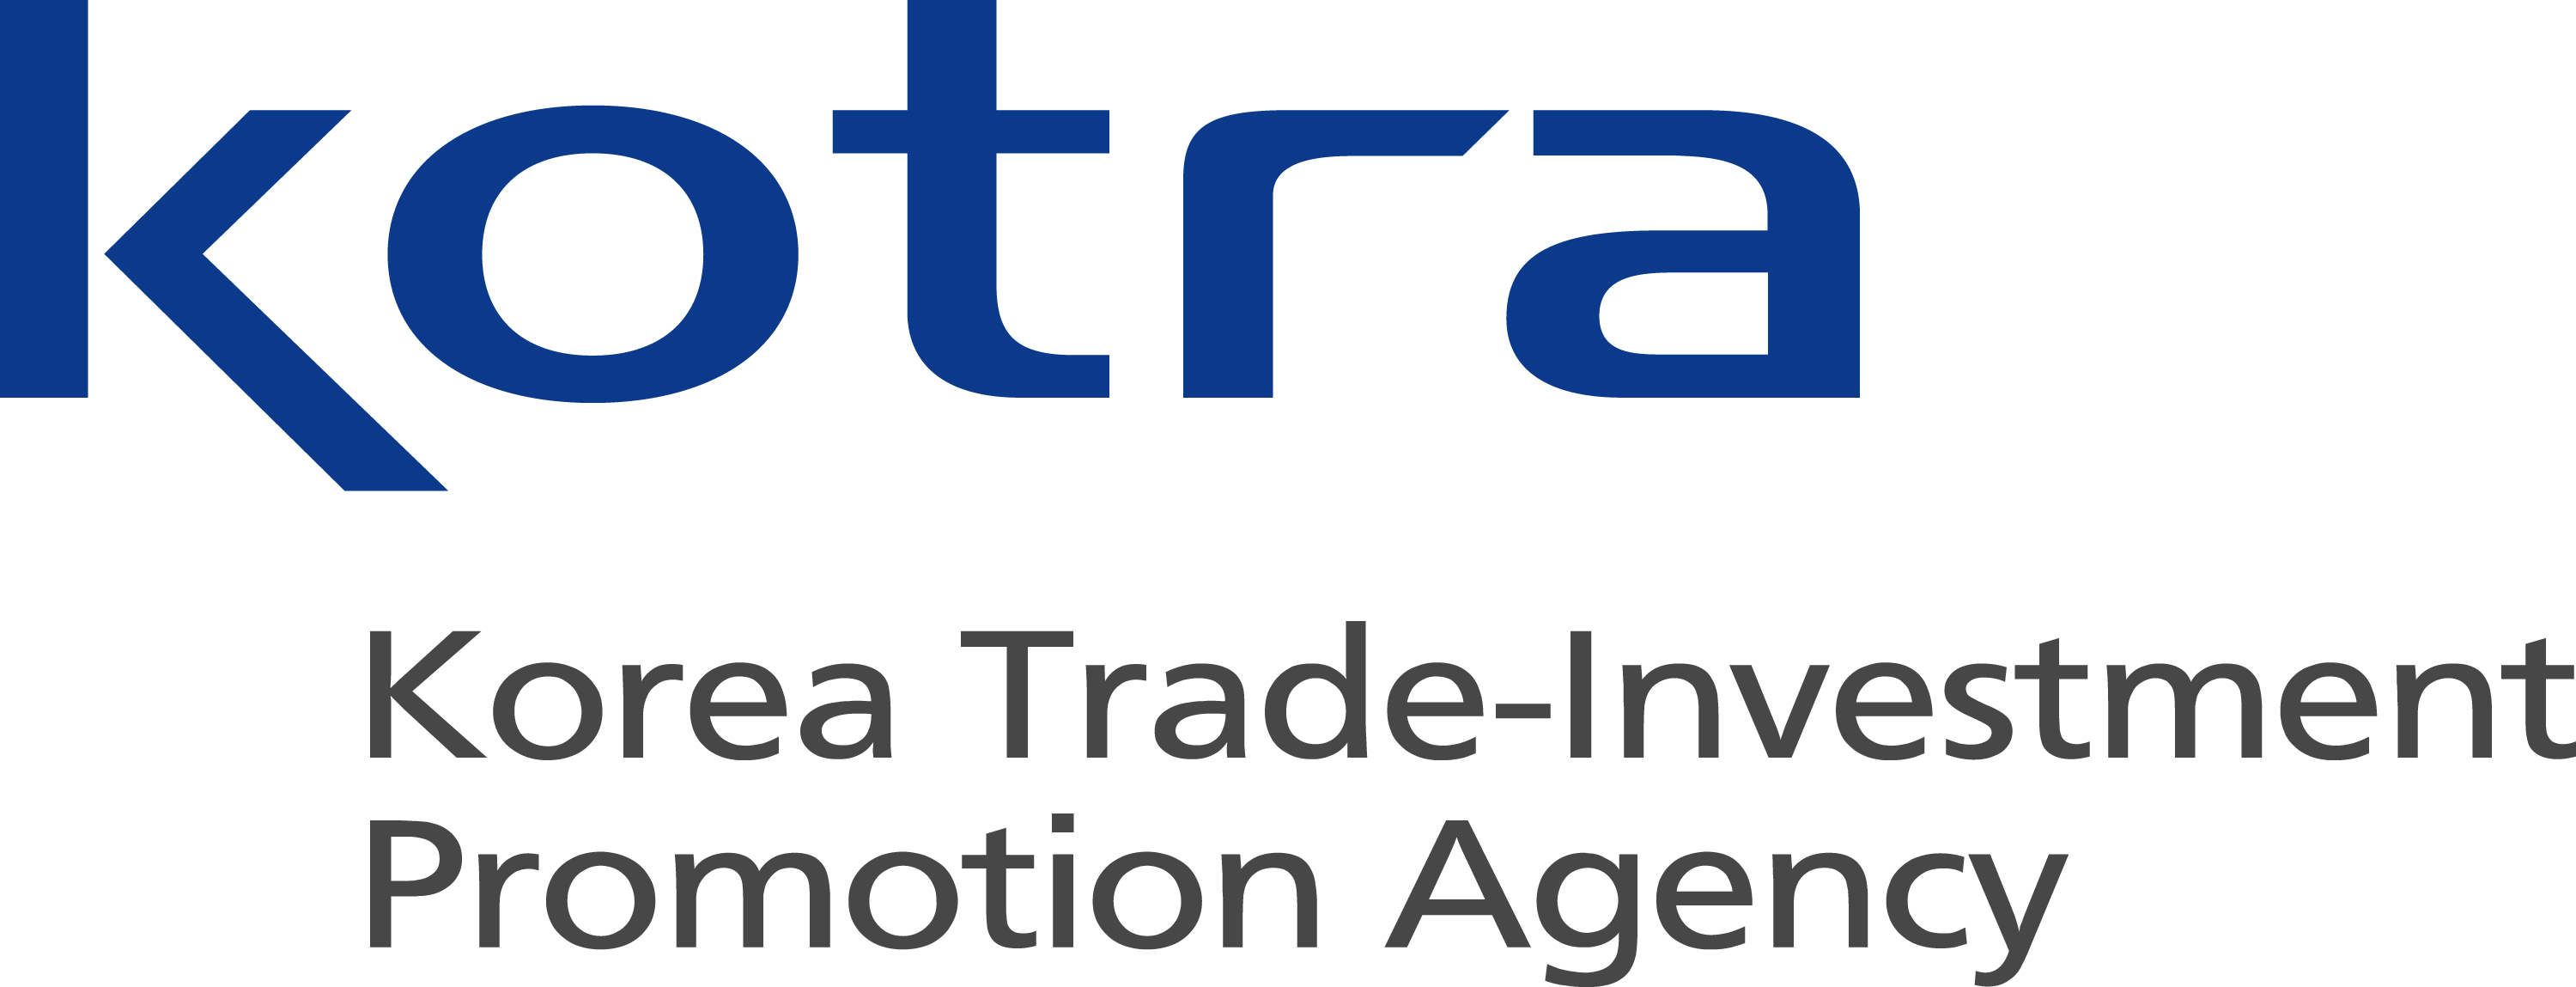 logo Korean Trade Investment Promotion Agency